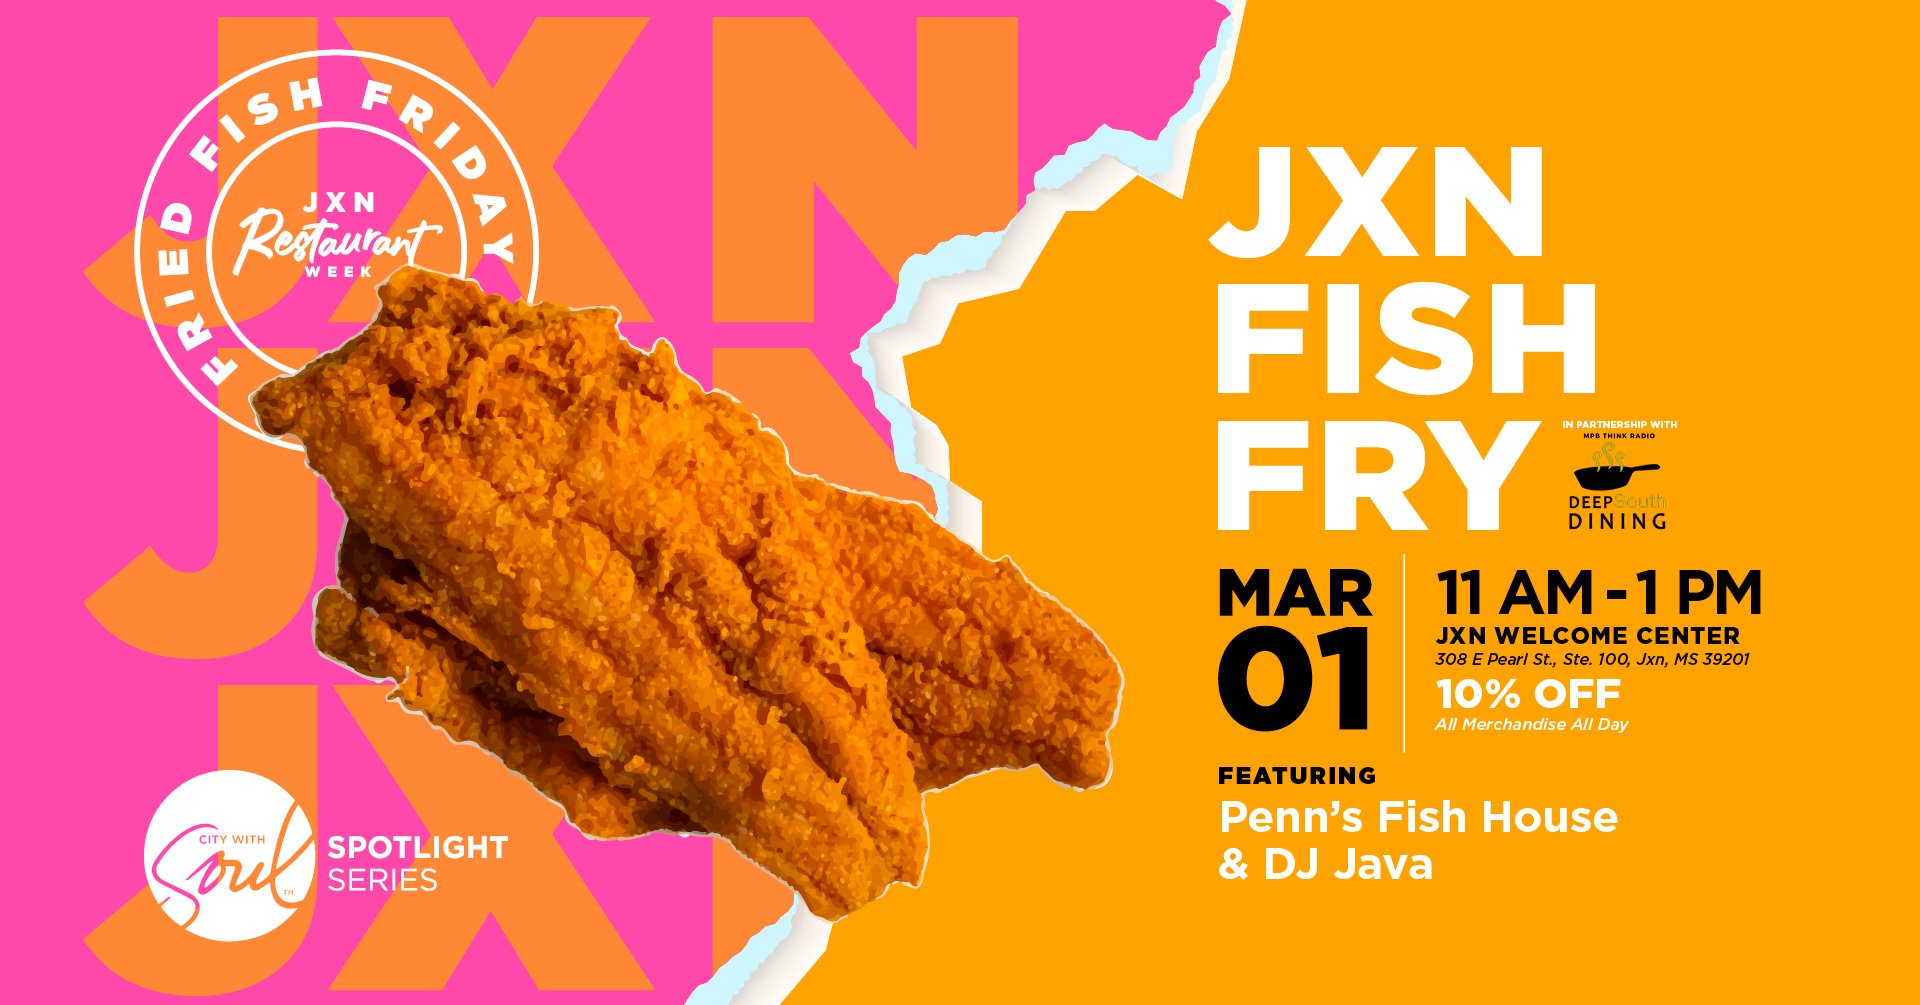 City With Soul Spotlight Series: Jxn Fish Fry